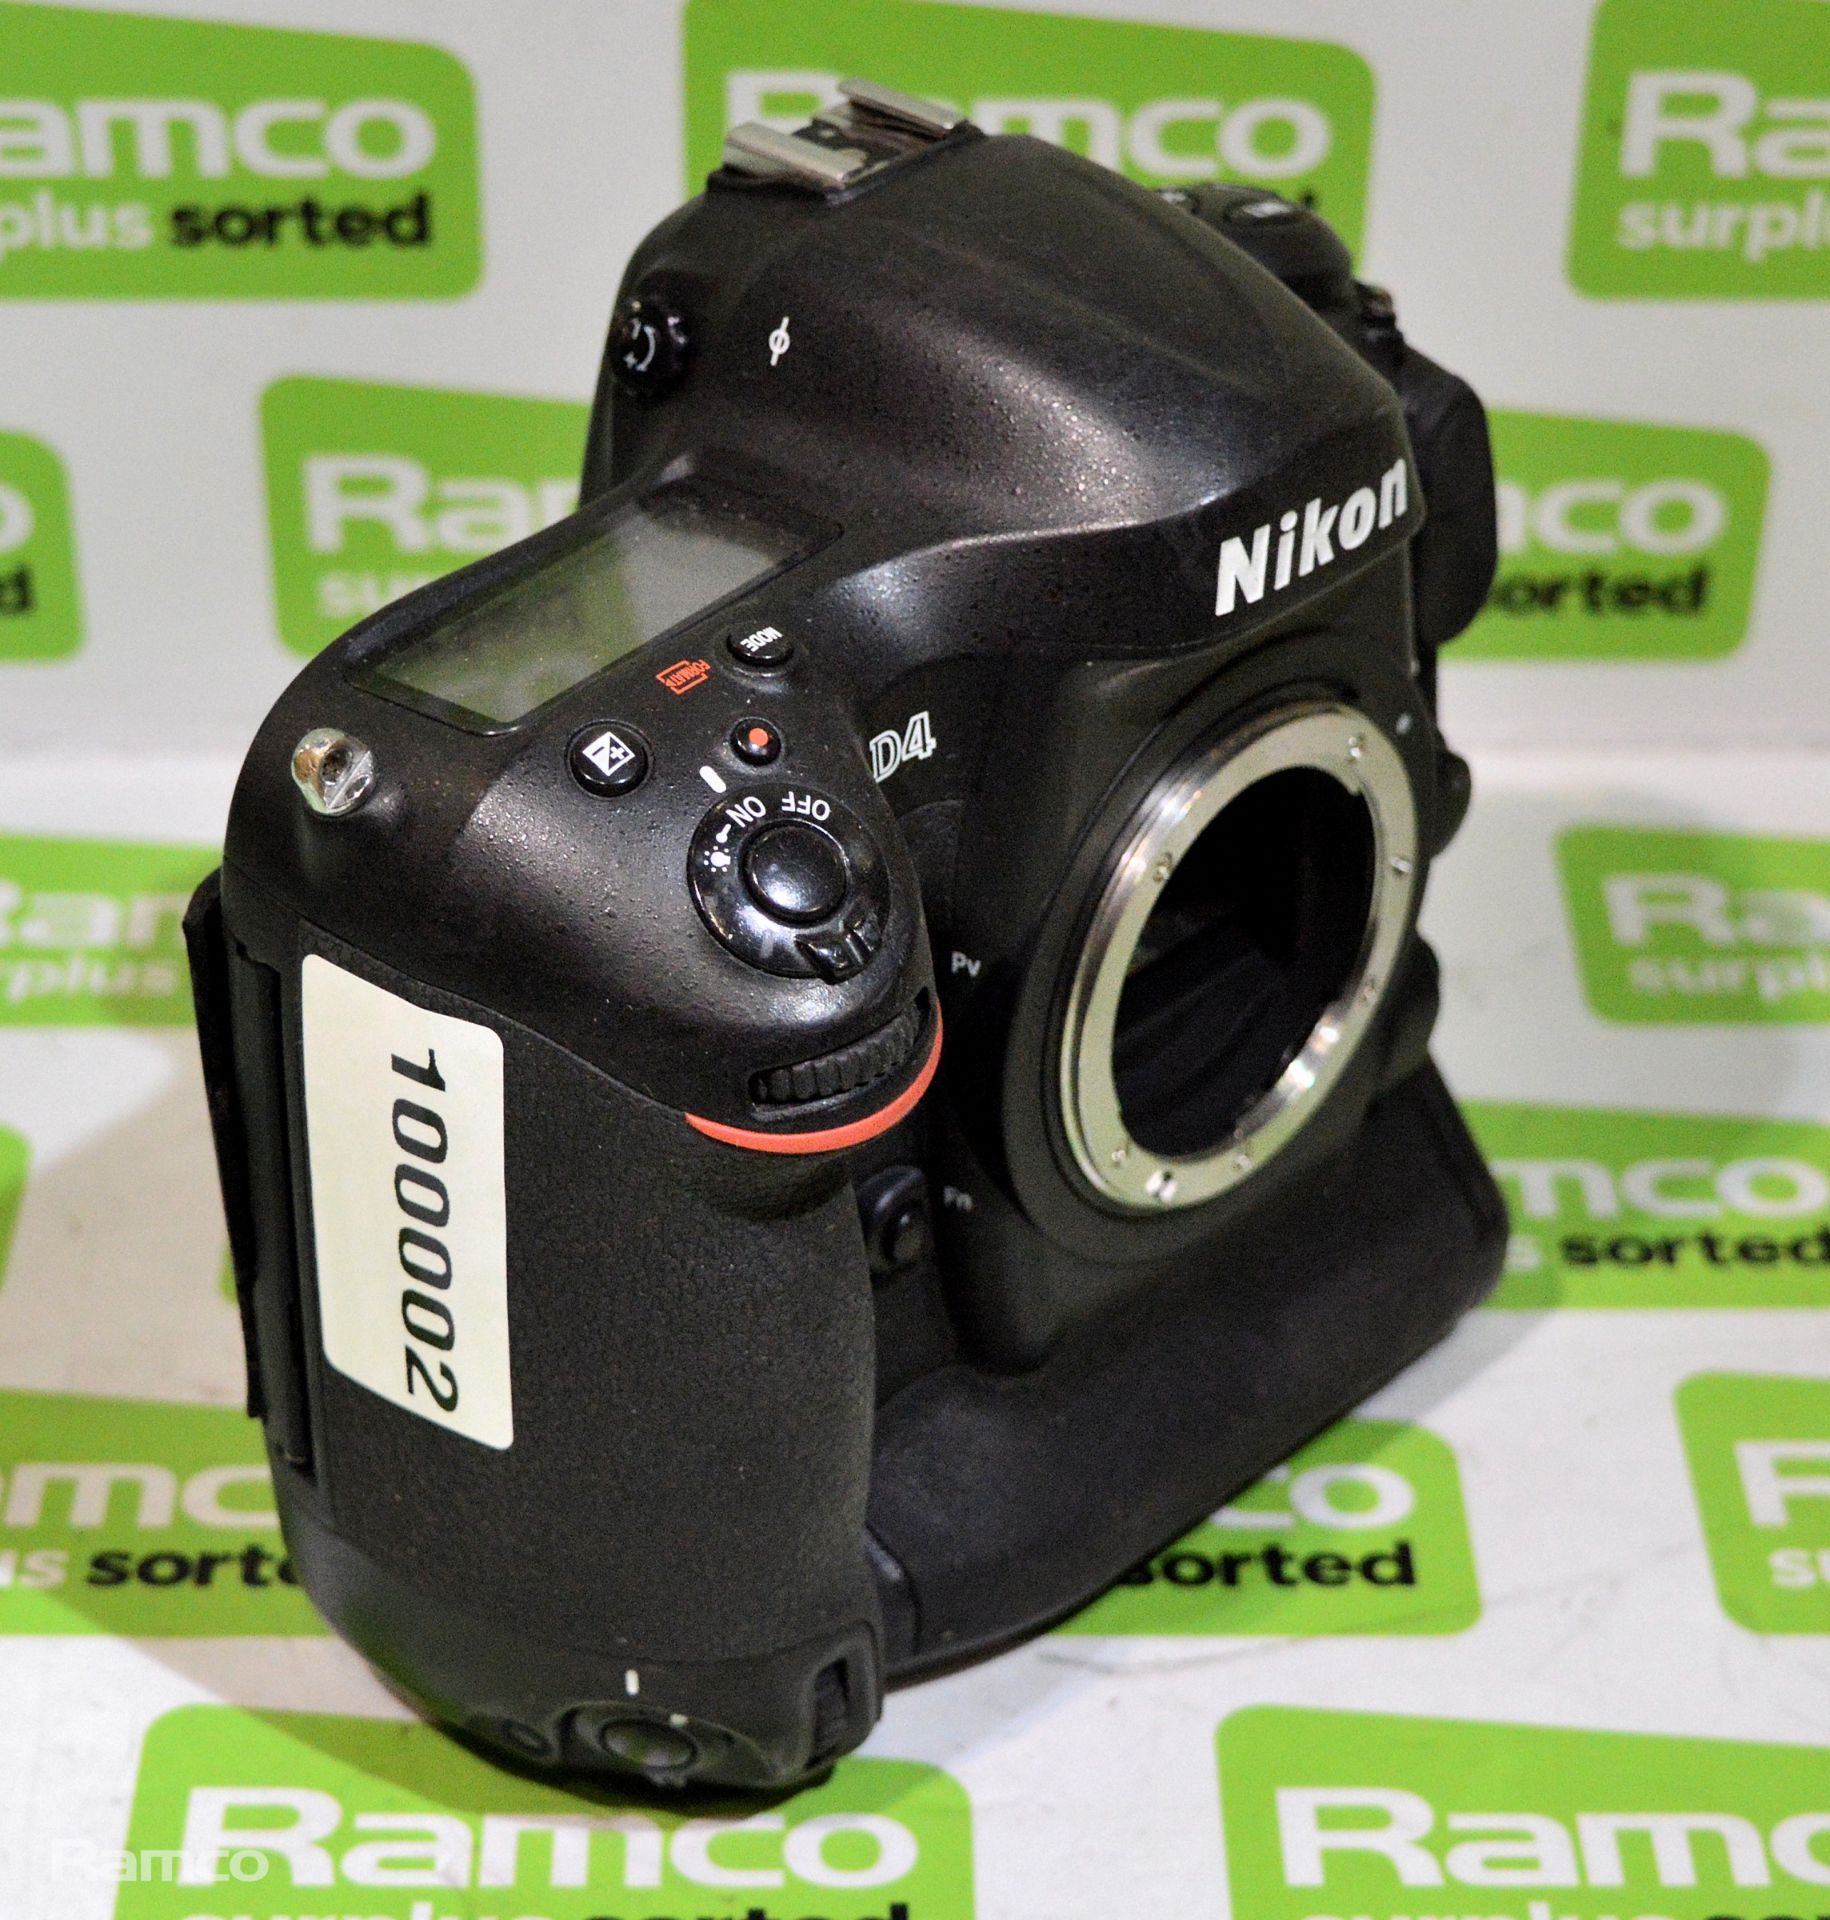 Nikon D4 digital SLR camera body, no battery - Image 2 of 7